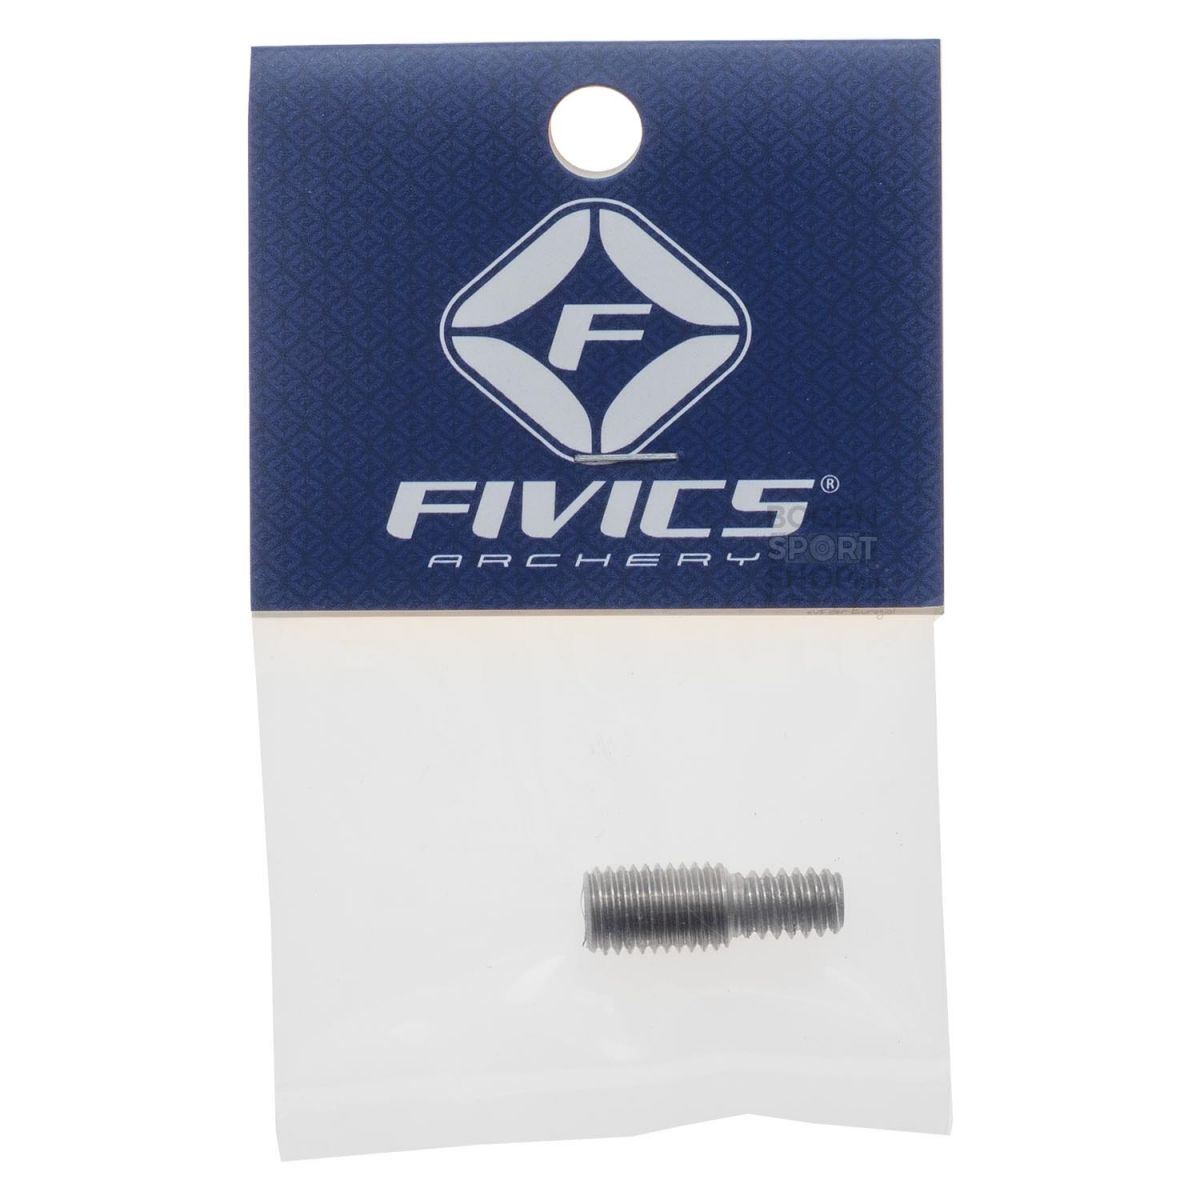 Fivics Adapter Screw 1/4" to 5/16"